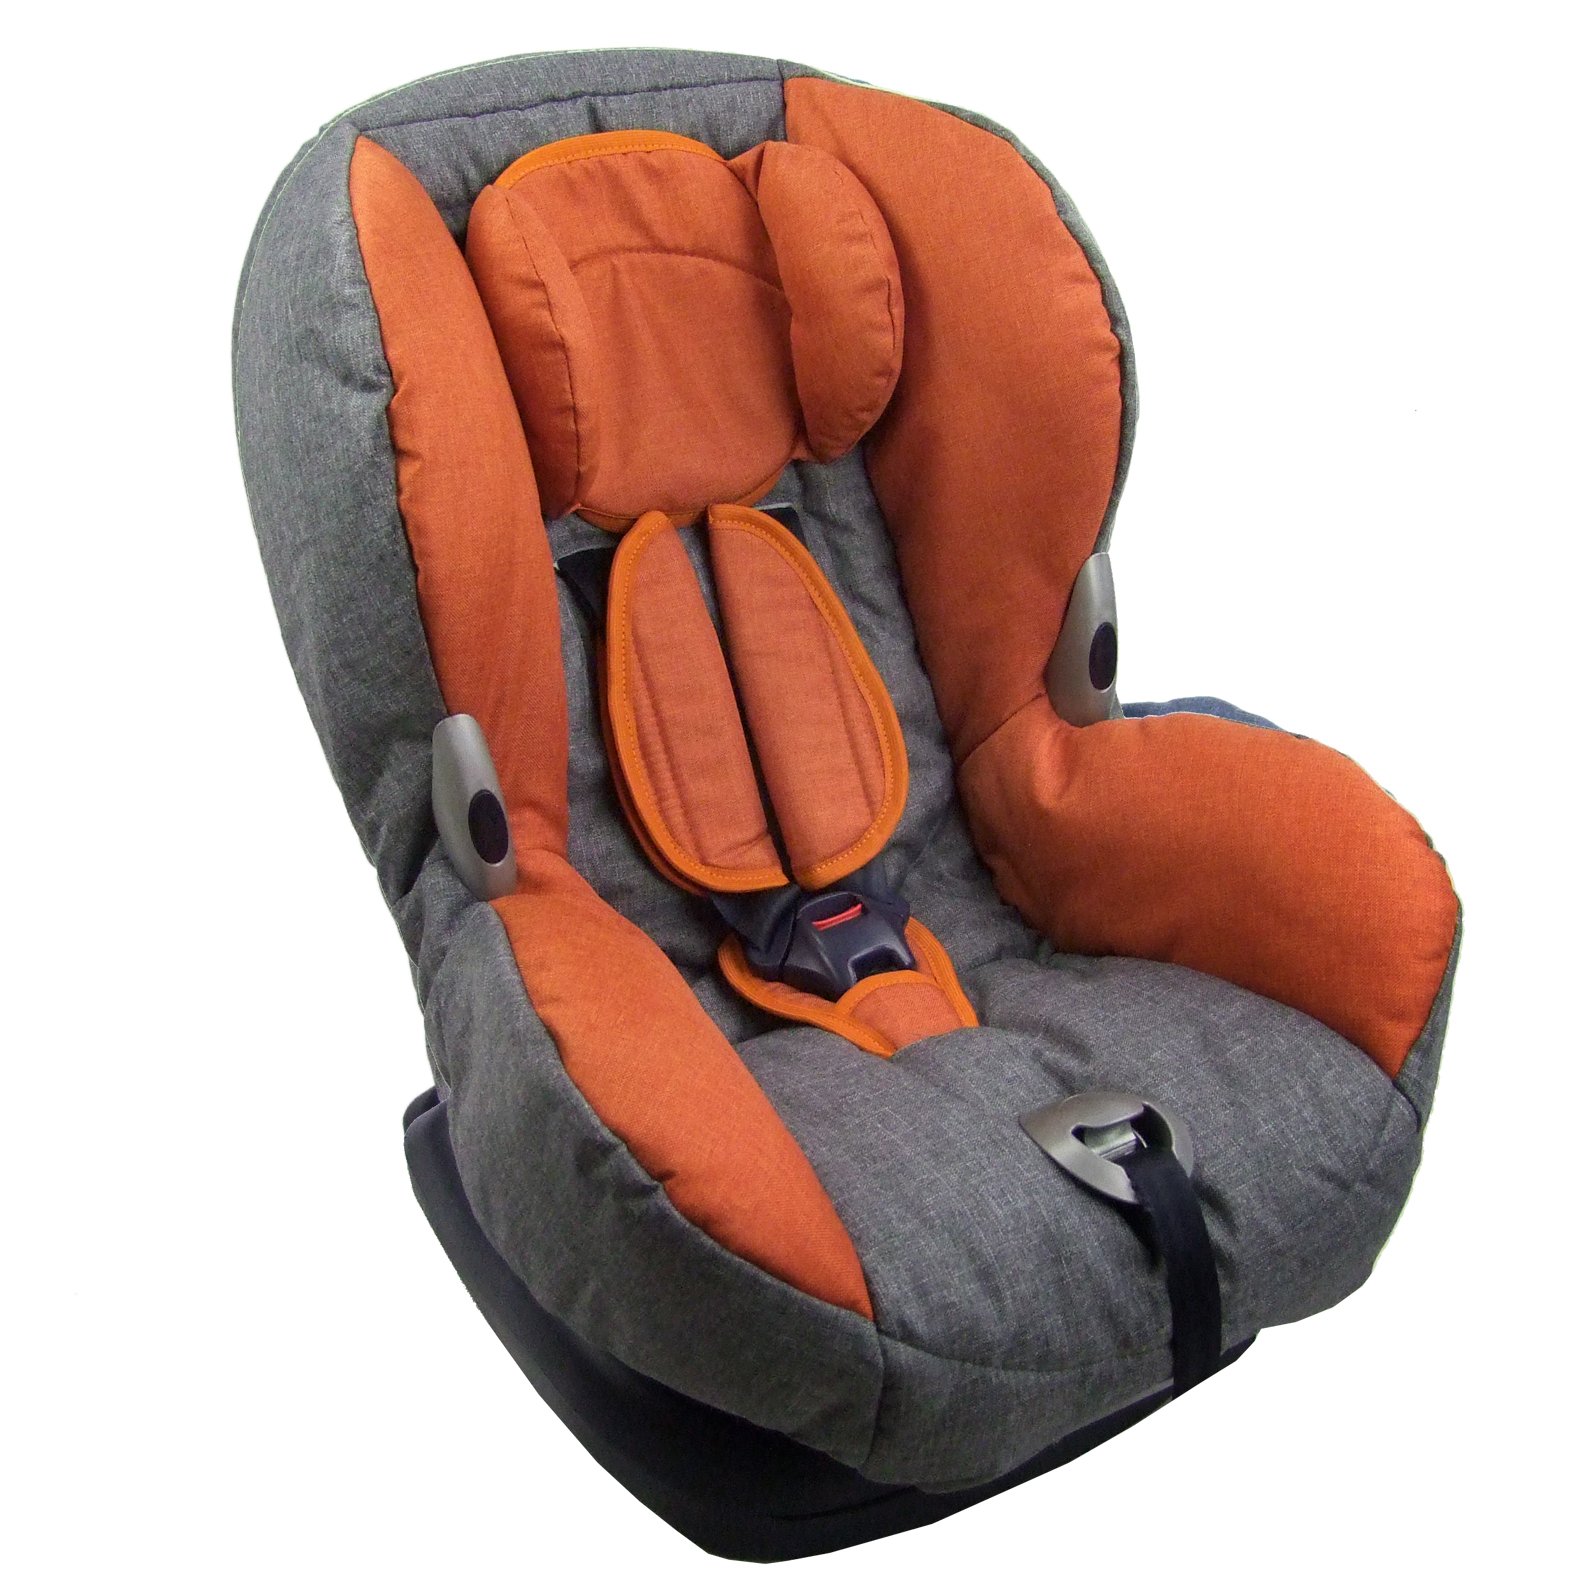 BAMBINIWELT Ersatzbezug Bezug kompatibel mit Maxi Cosi XP + PRIORIFIX Auto-Kindersitz MELIERT (meliert orange)